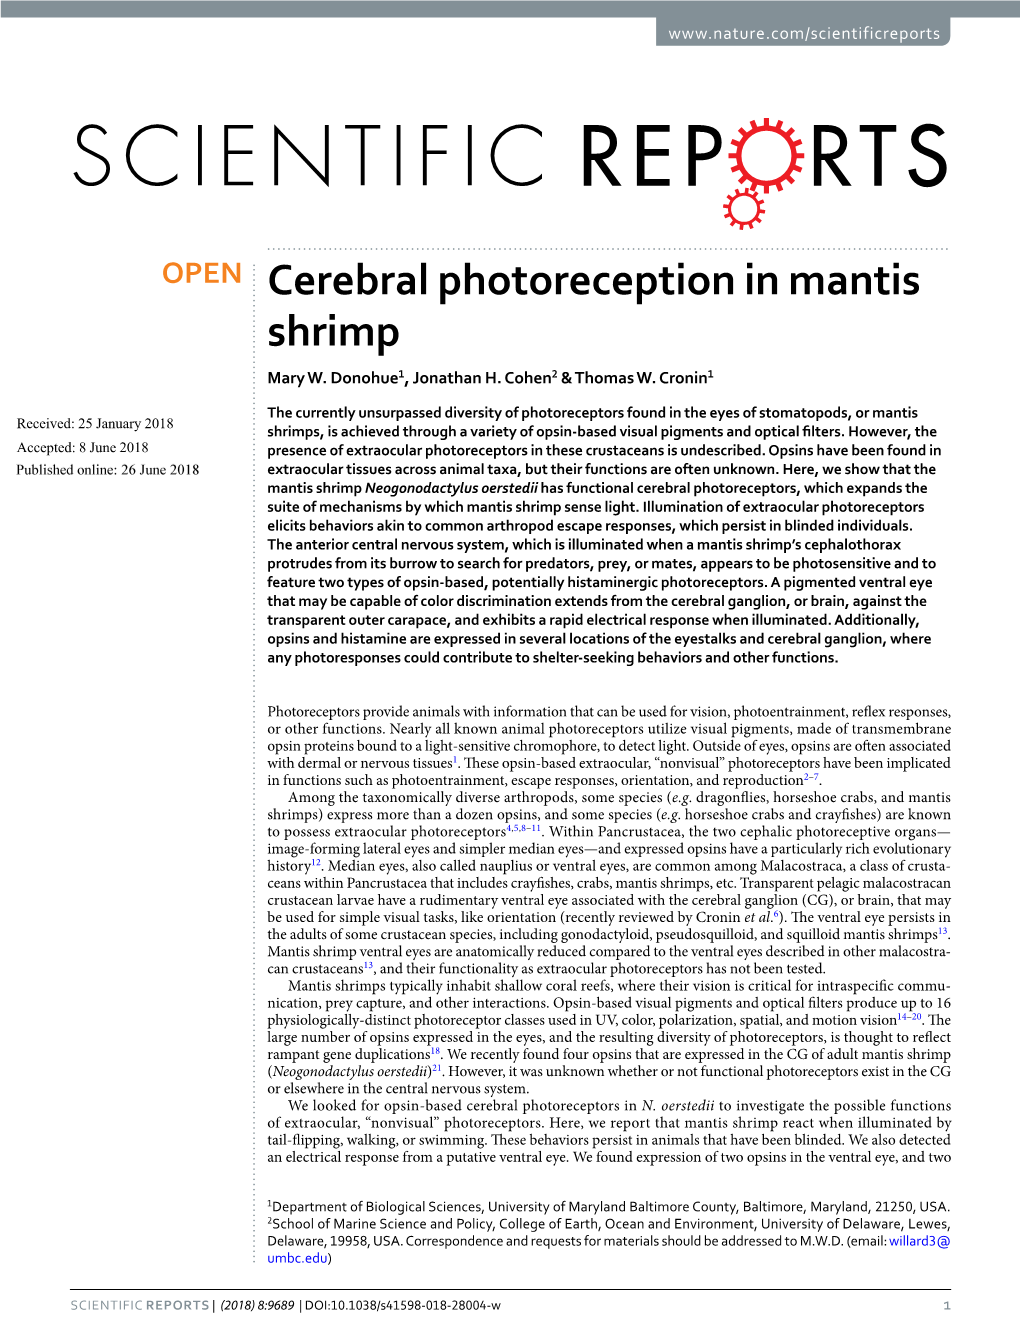 Cerebral Photoreception in Mantis Shrimp Mary W